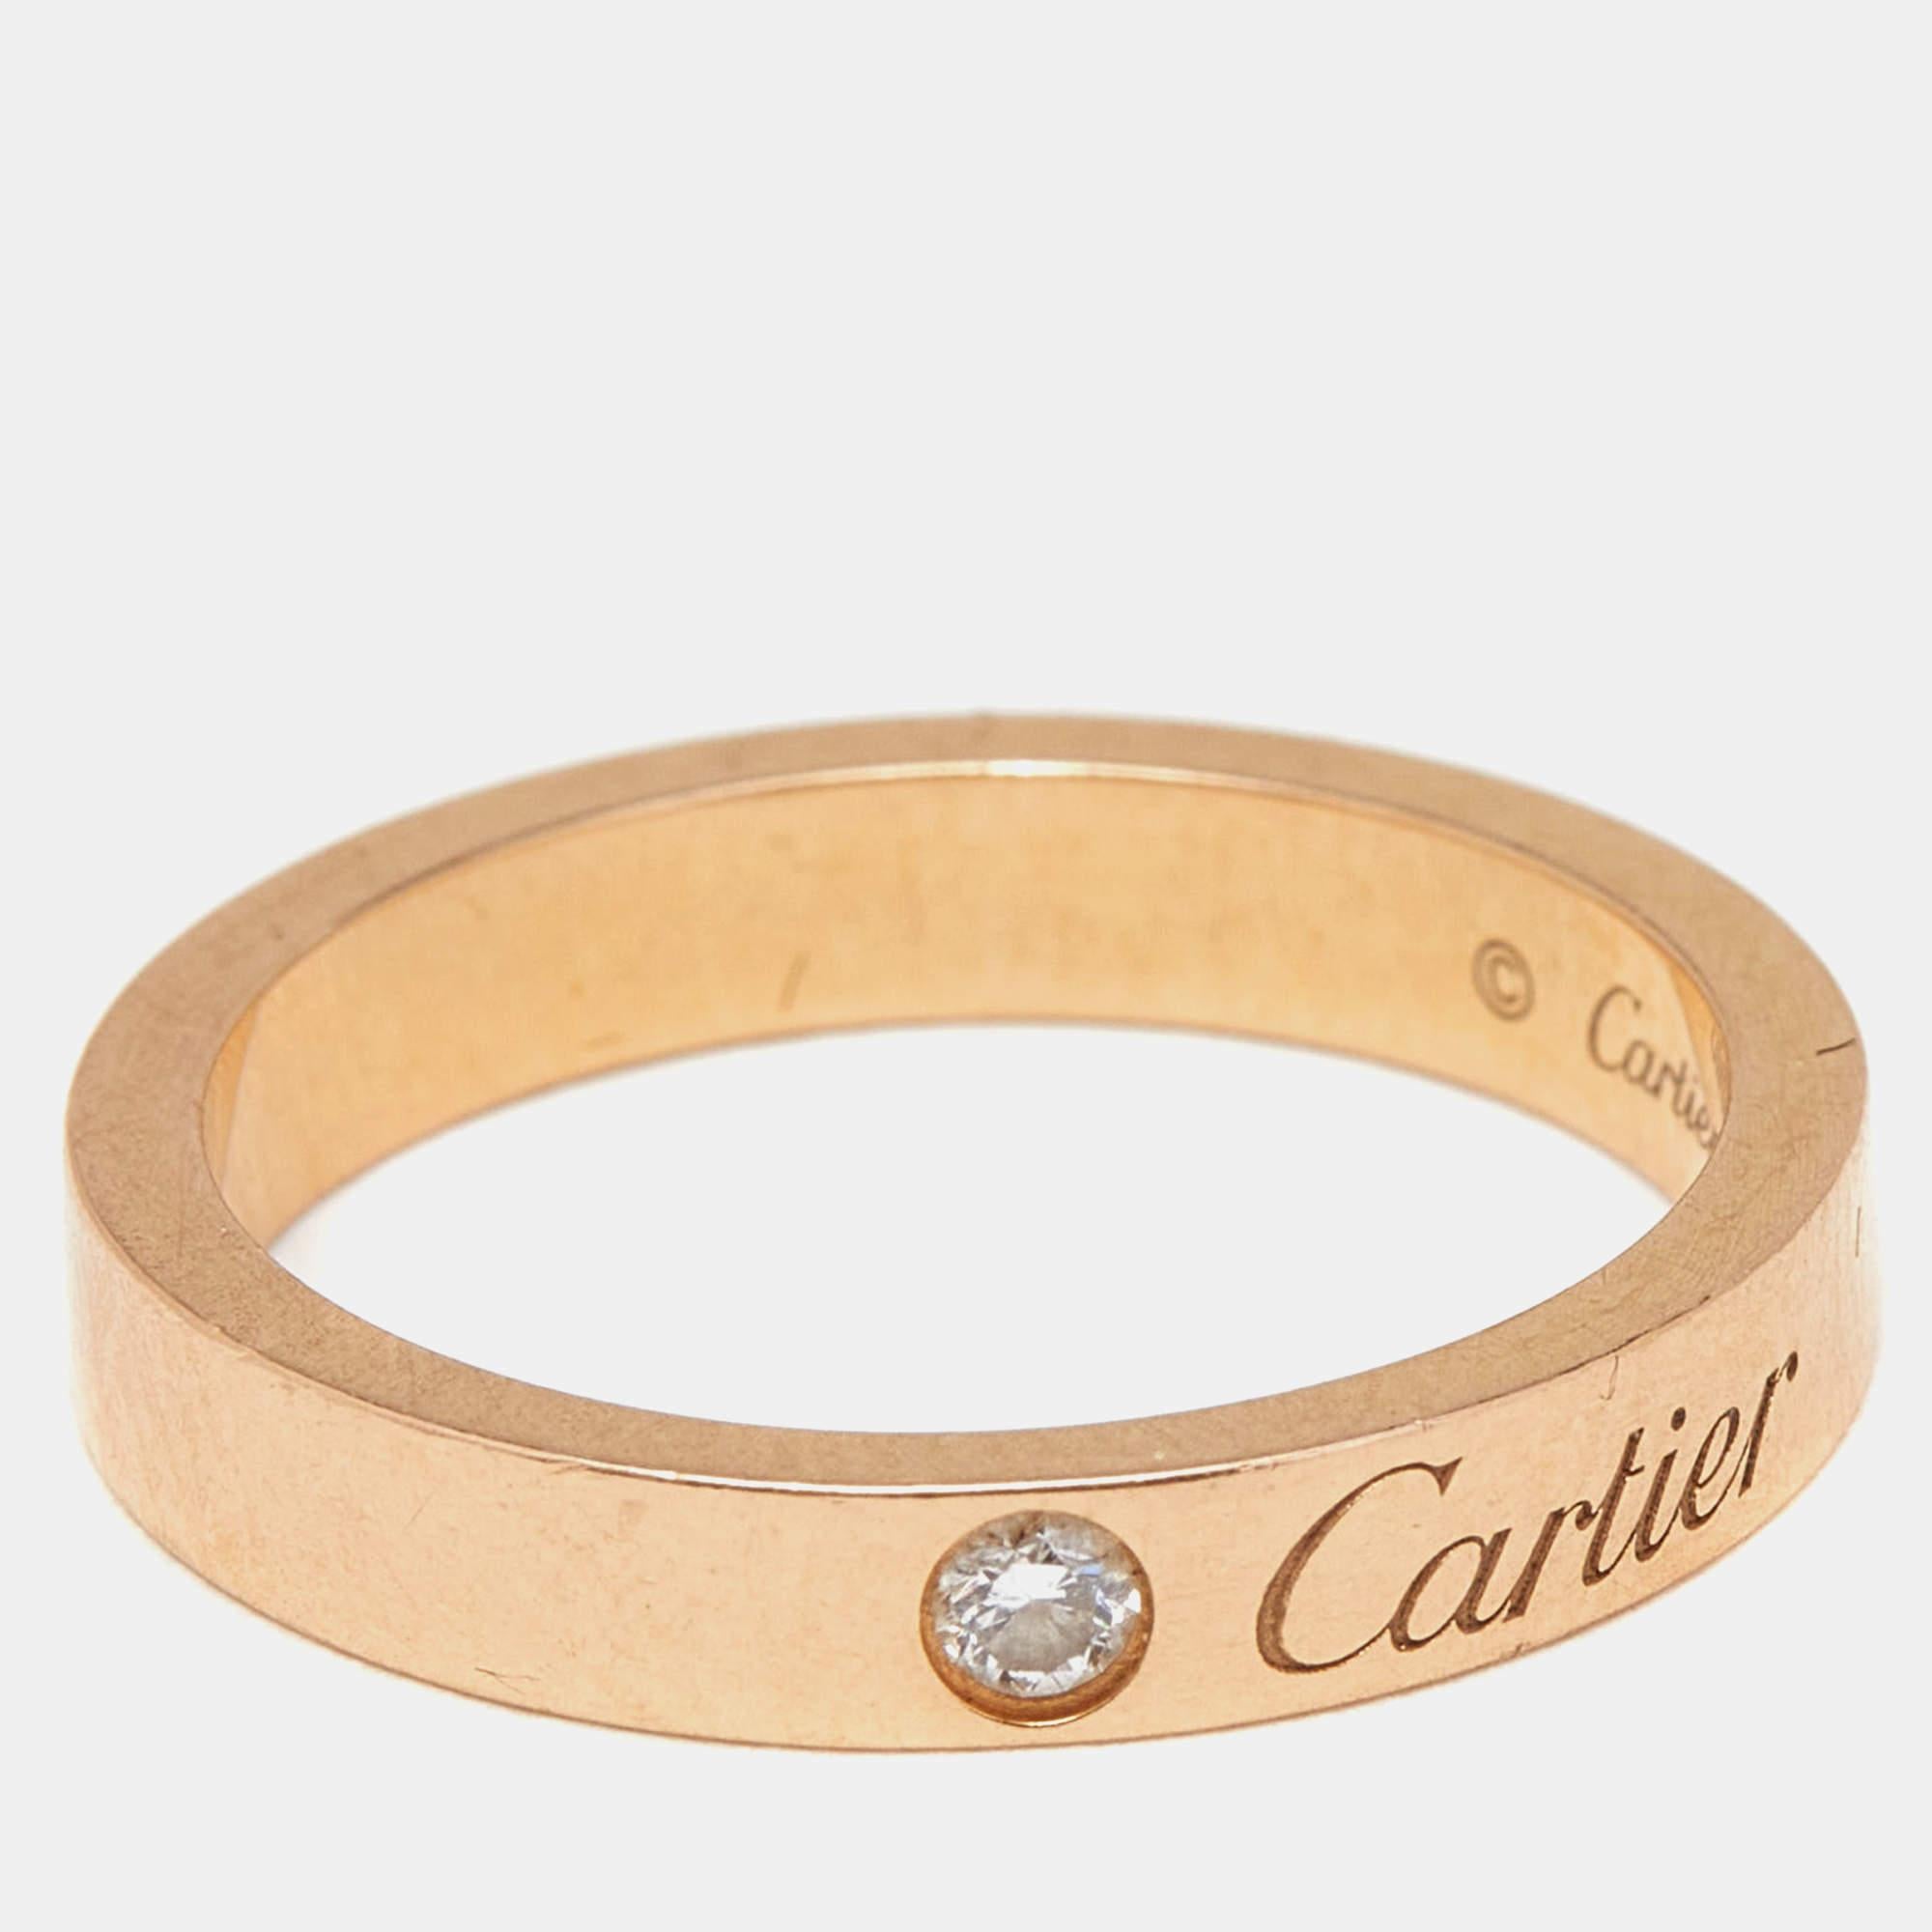 Cartier C De Cartier Diamond 18k Rose Gold Ring Size 50 3